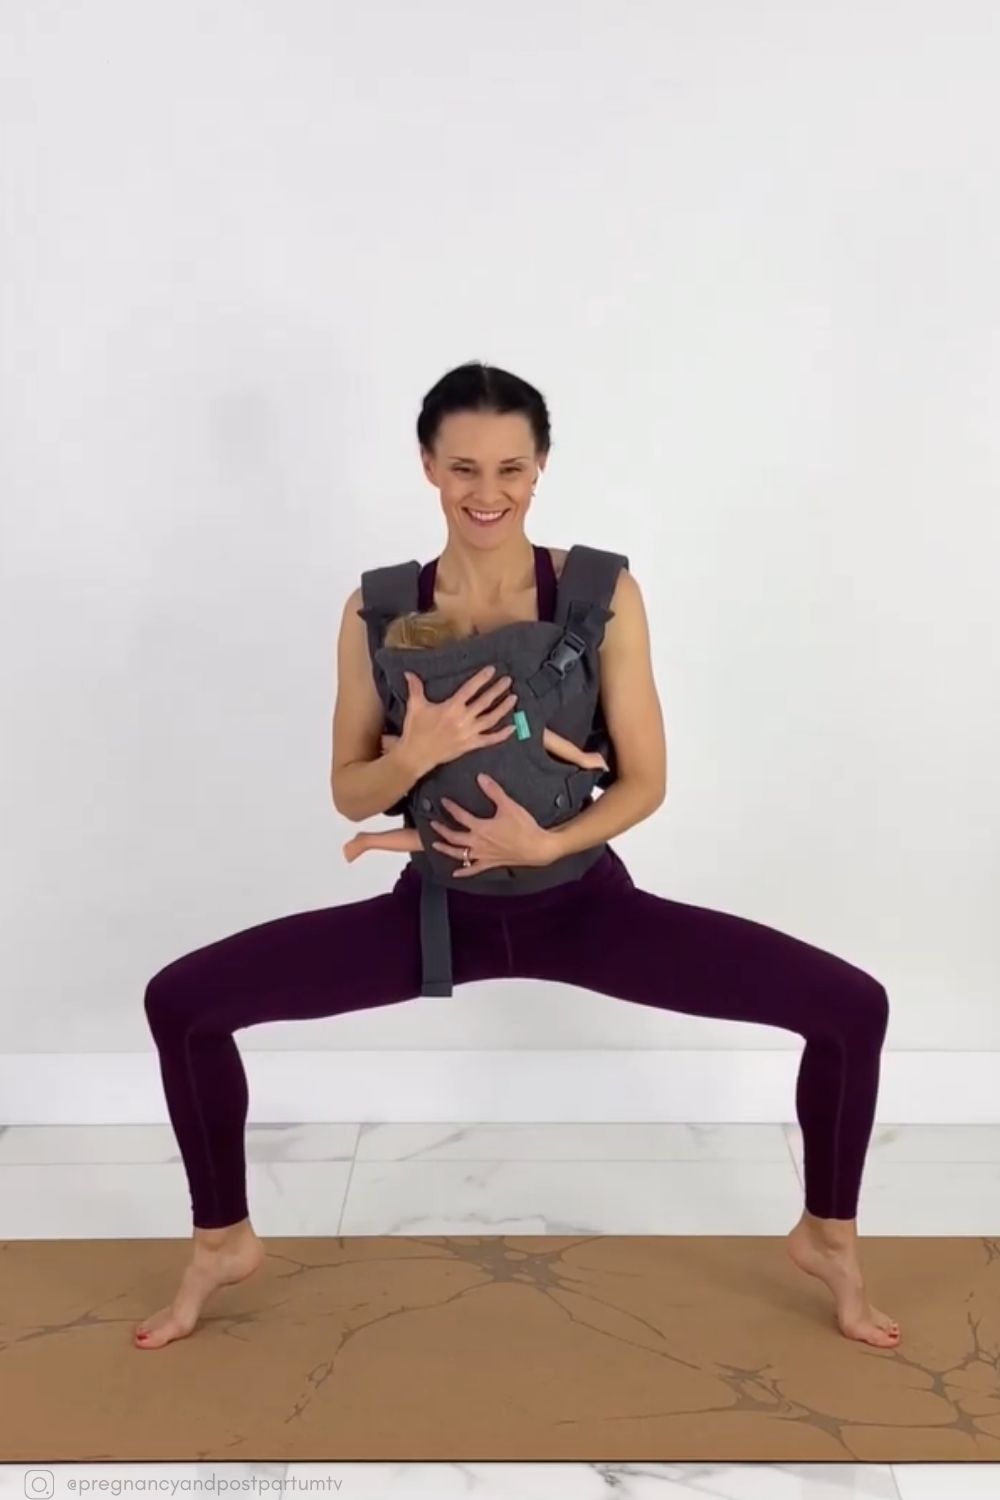 Yoga mat Línea 4mm - Black